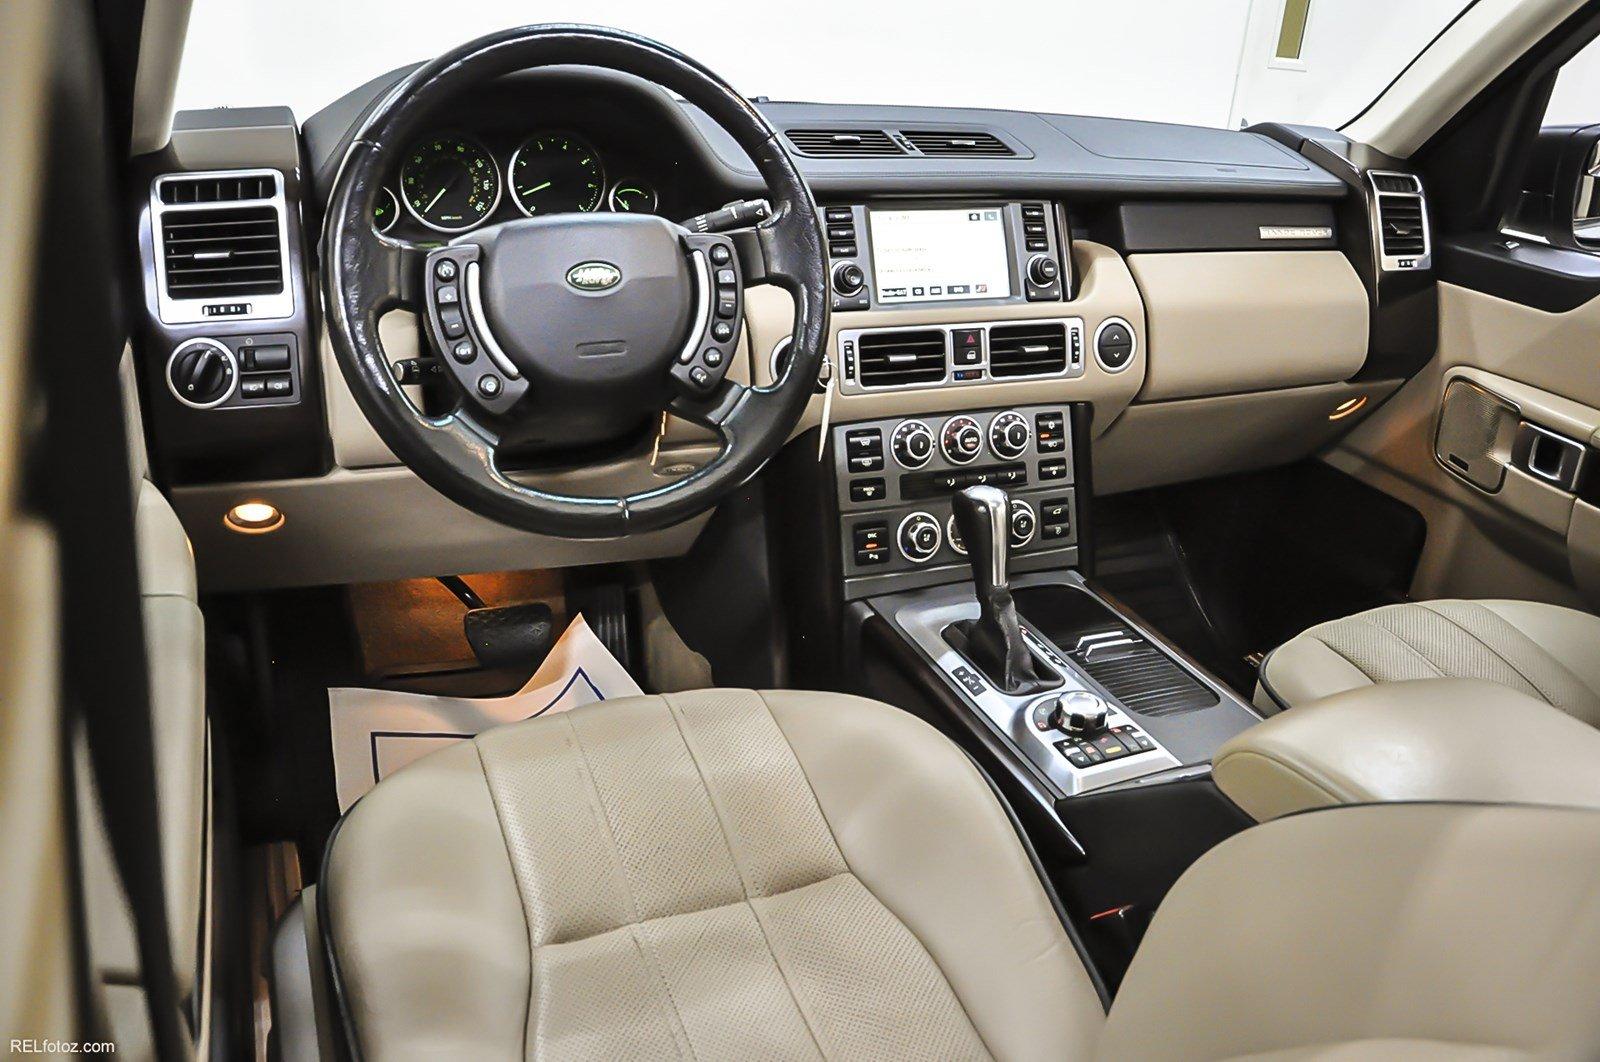 Used 2008 Land Rover Range Rover HSE for sale Sold at Gravity Autos Marietta in Marietta GA 30060 7